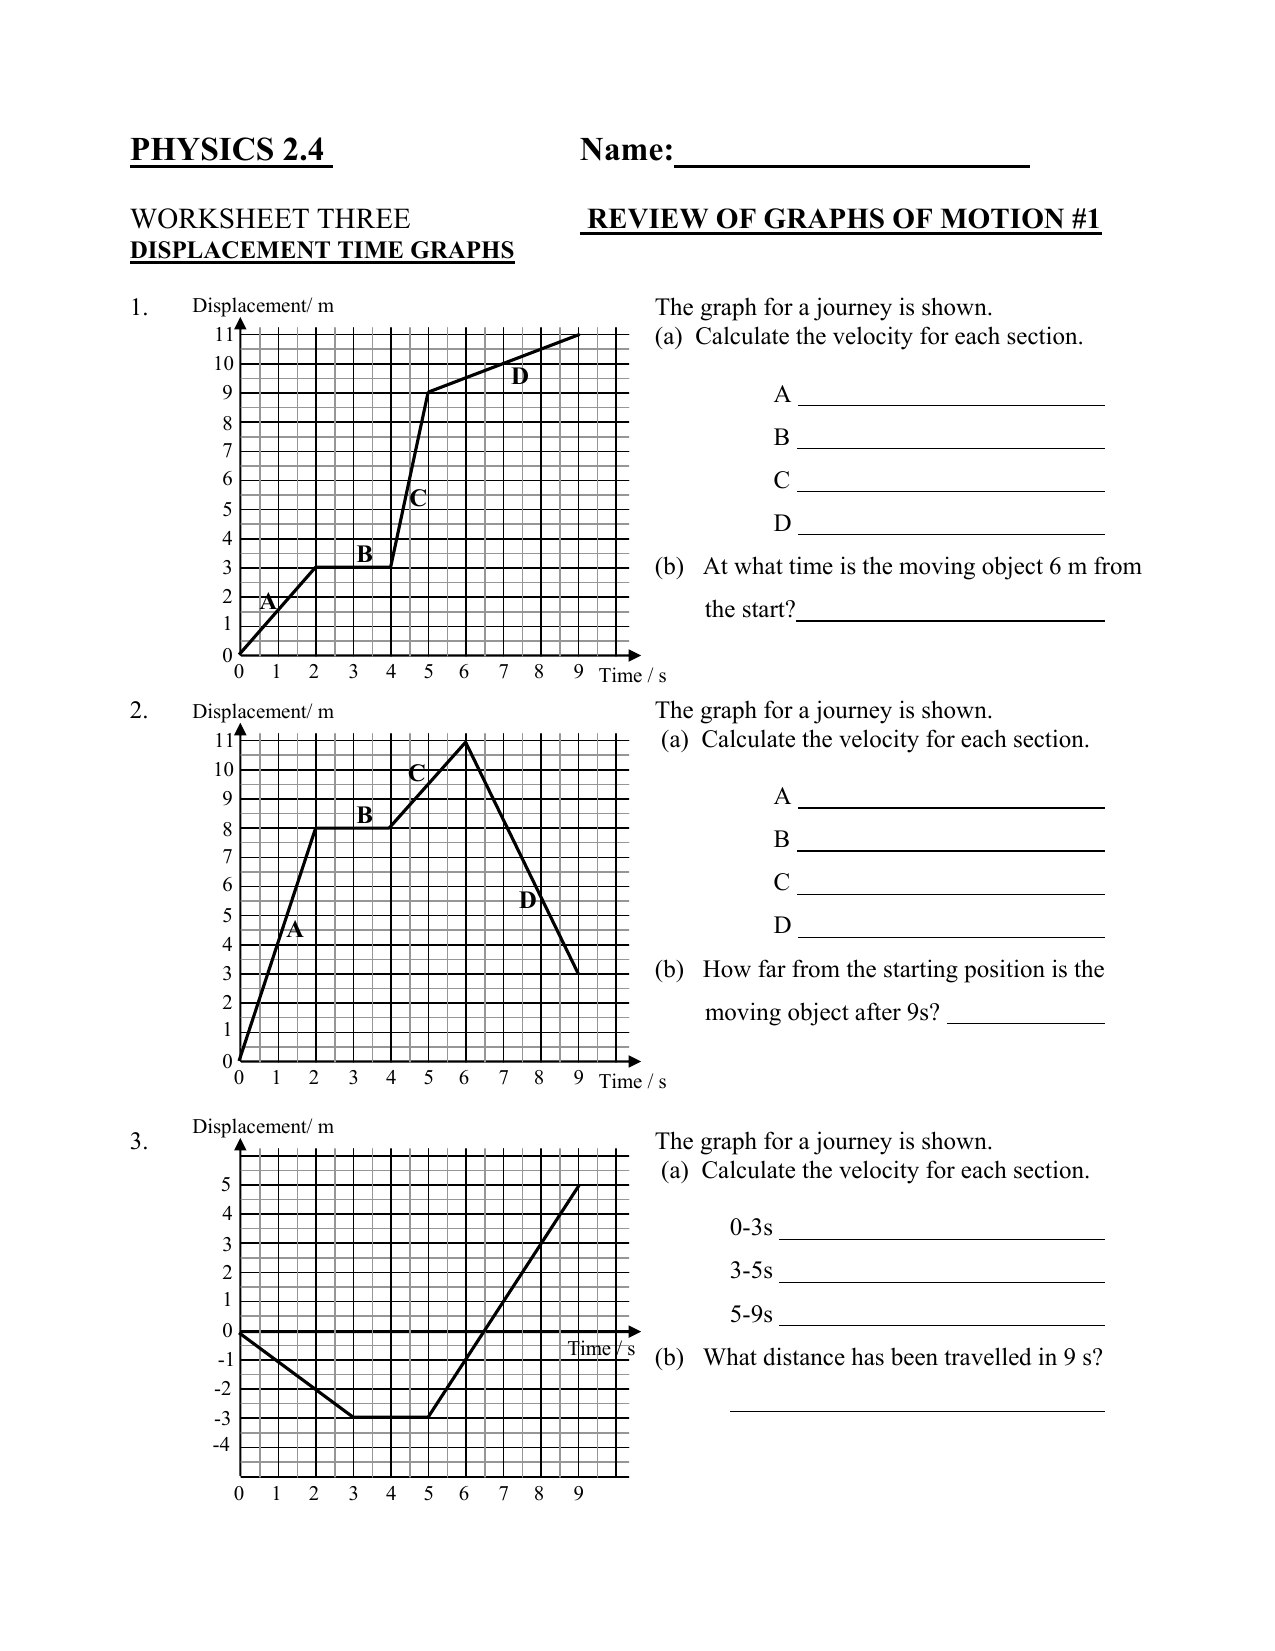 Graphing motion d vs t Regarding Motion Graphs Worksheet Answers